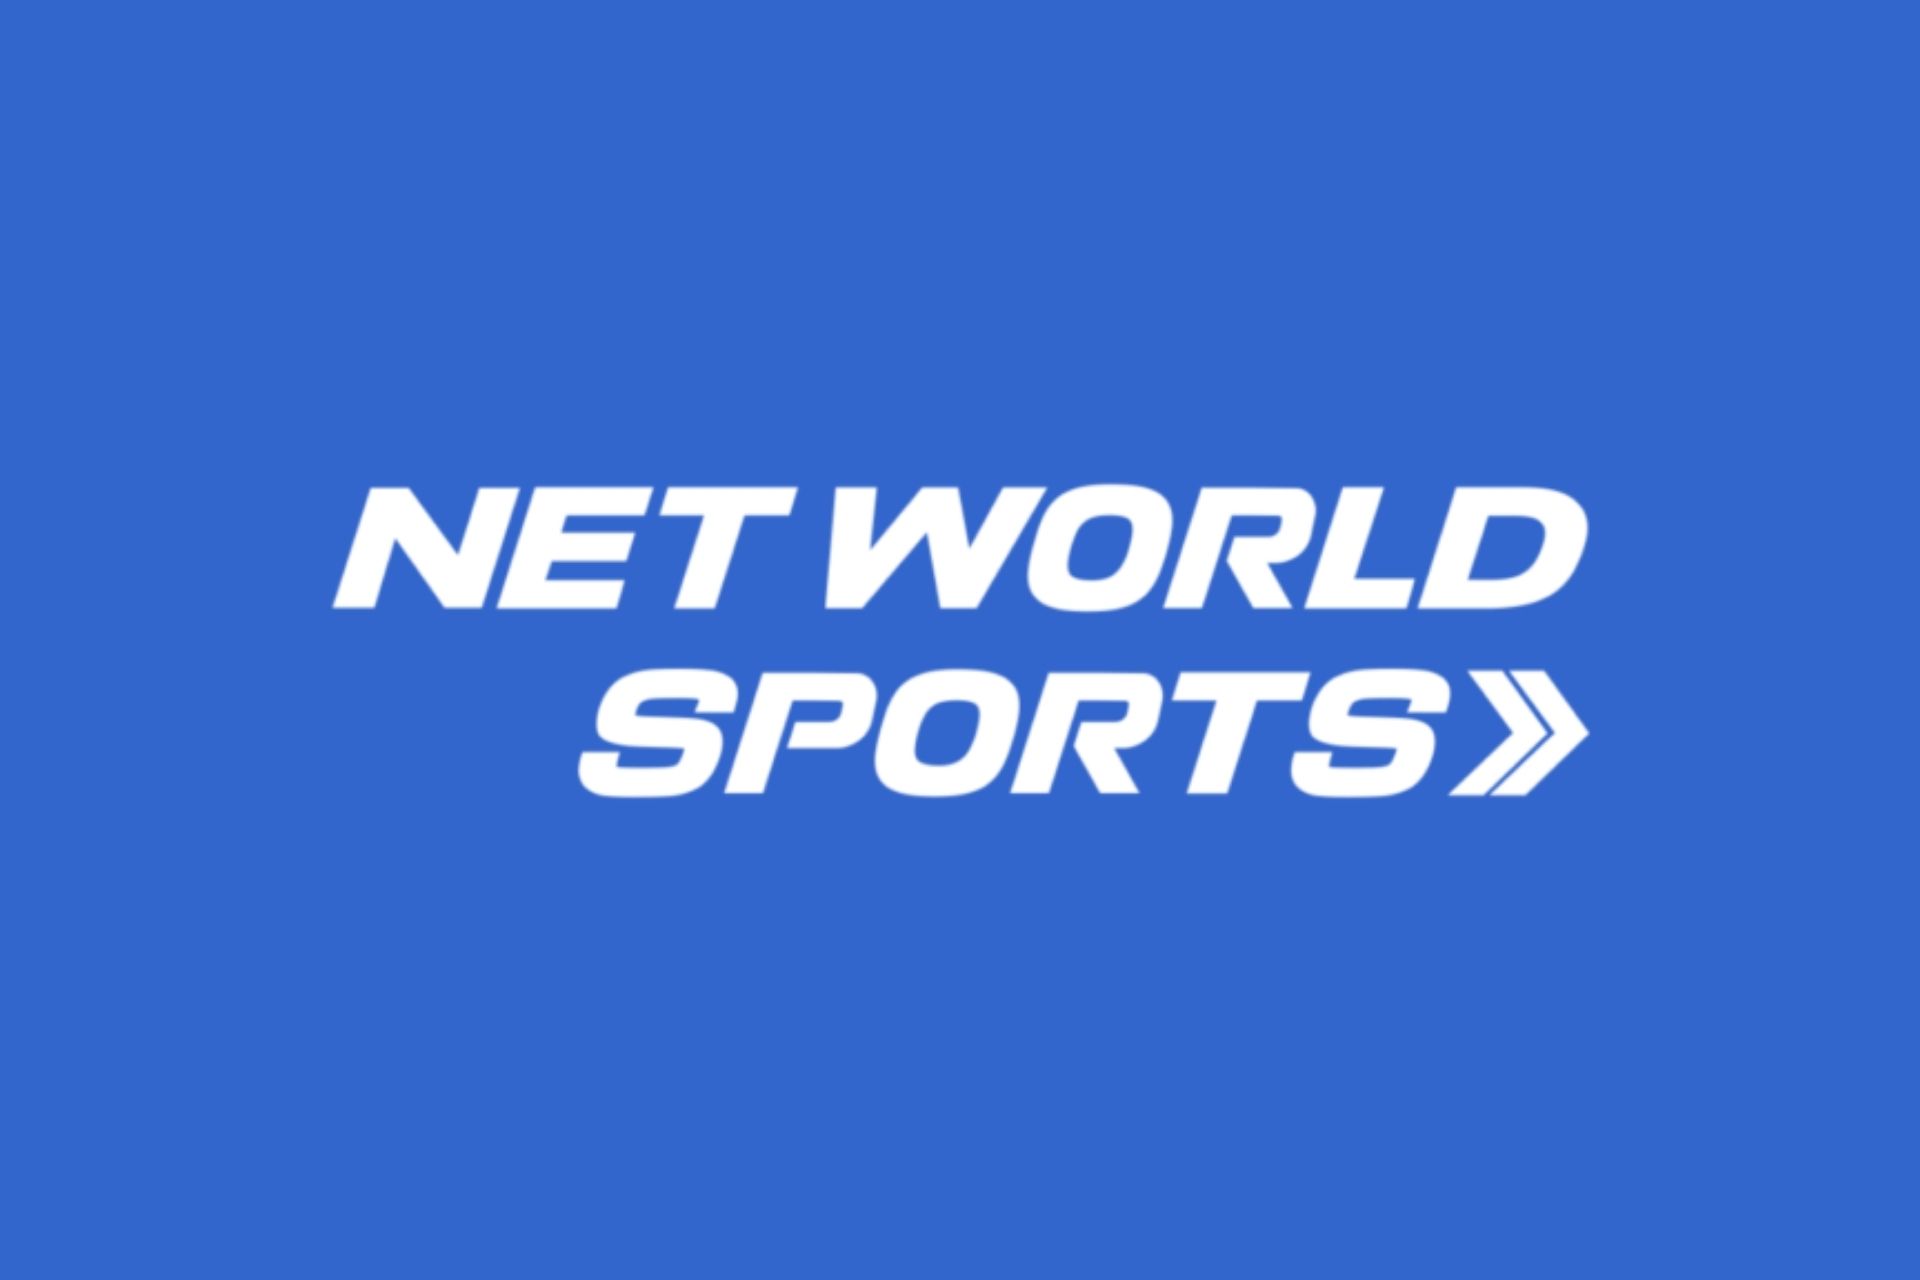 Networld sports logo